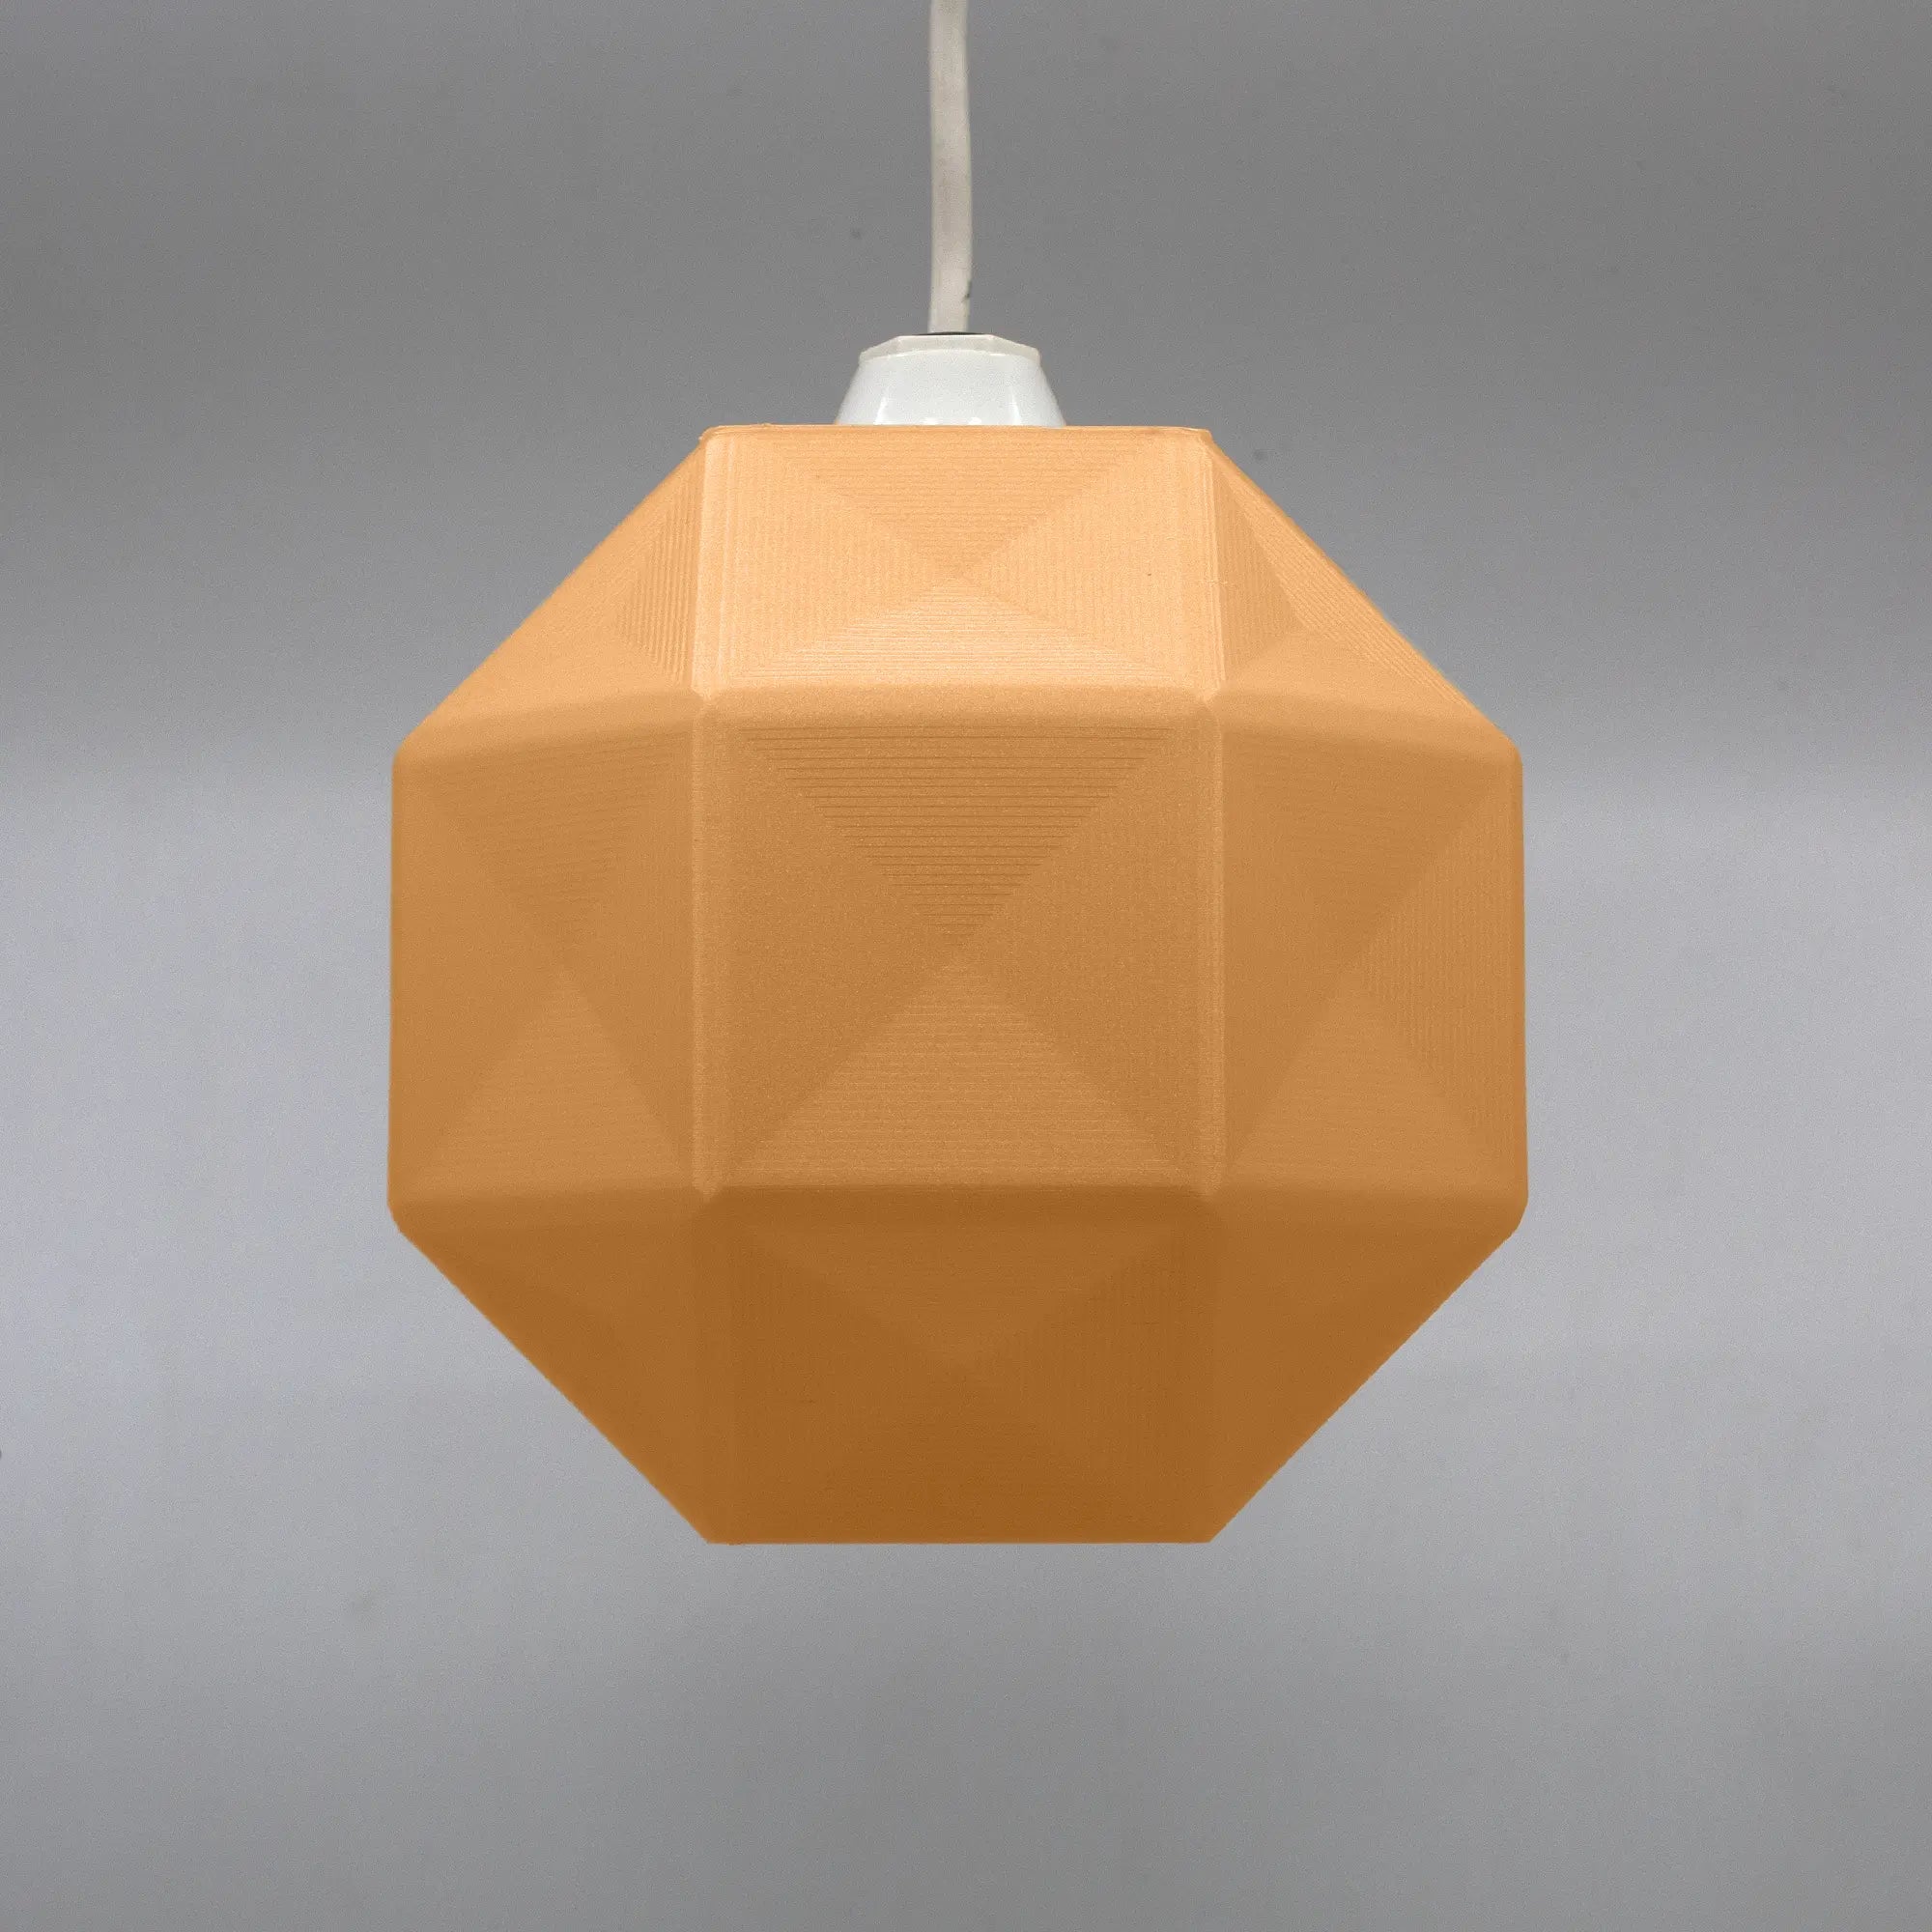 Tessera Lampshade - Modern Minimalist Design